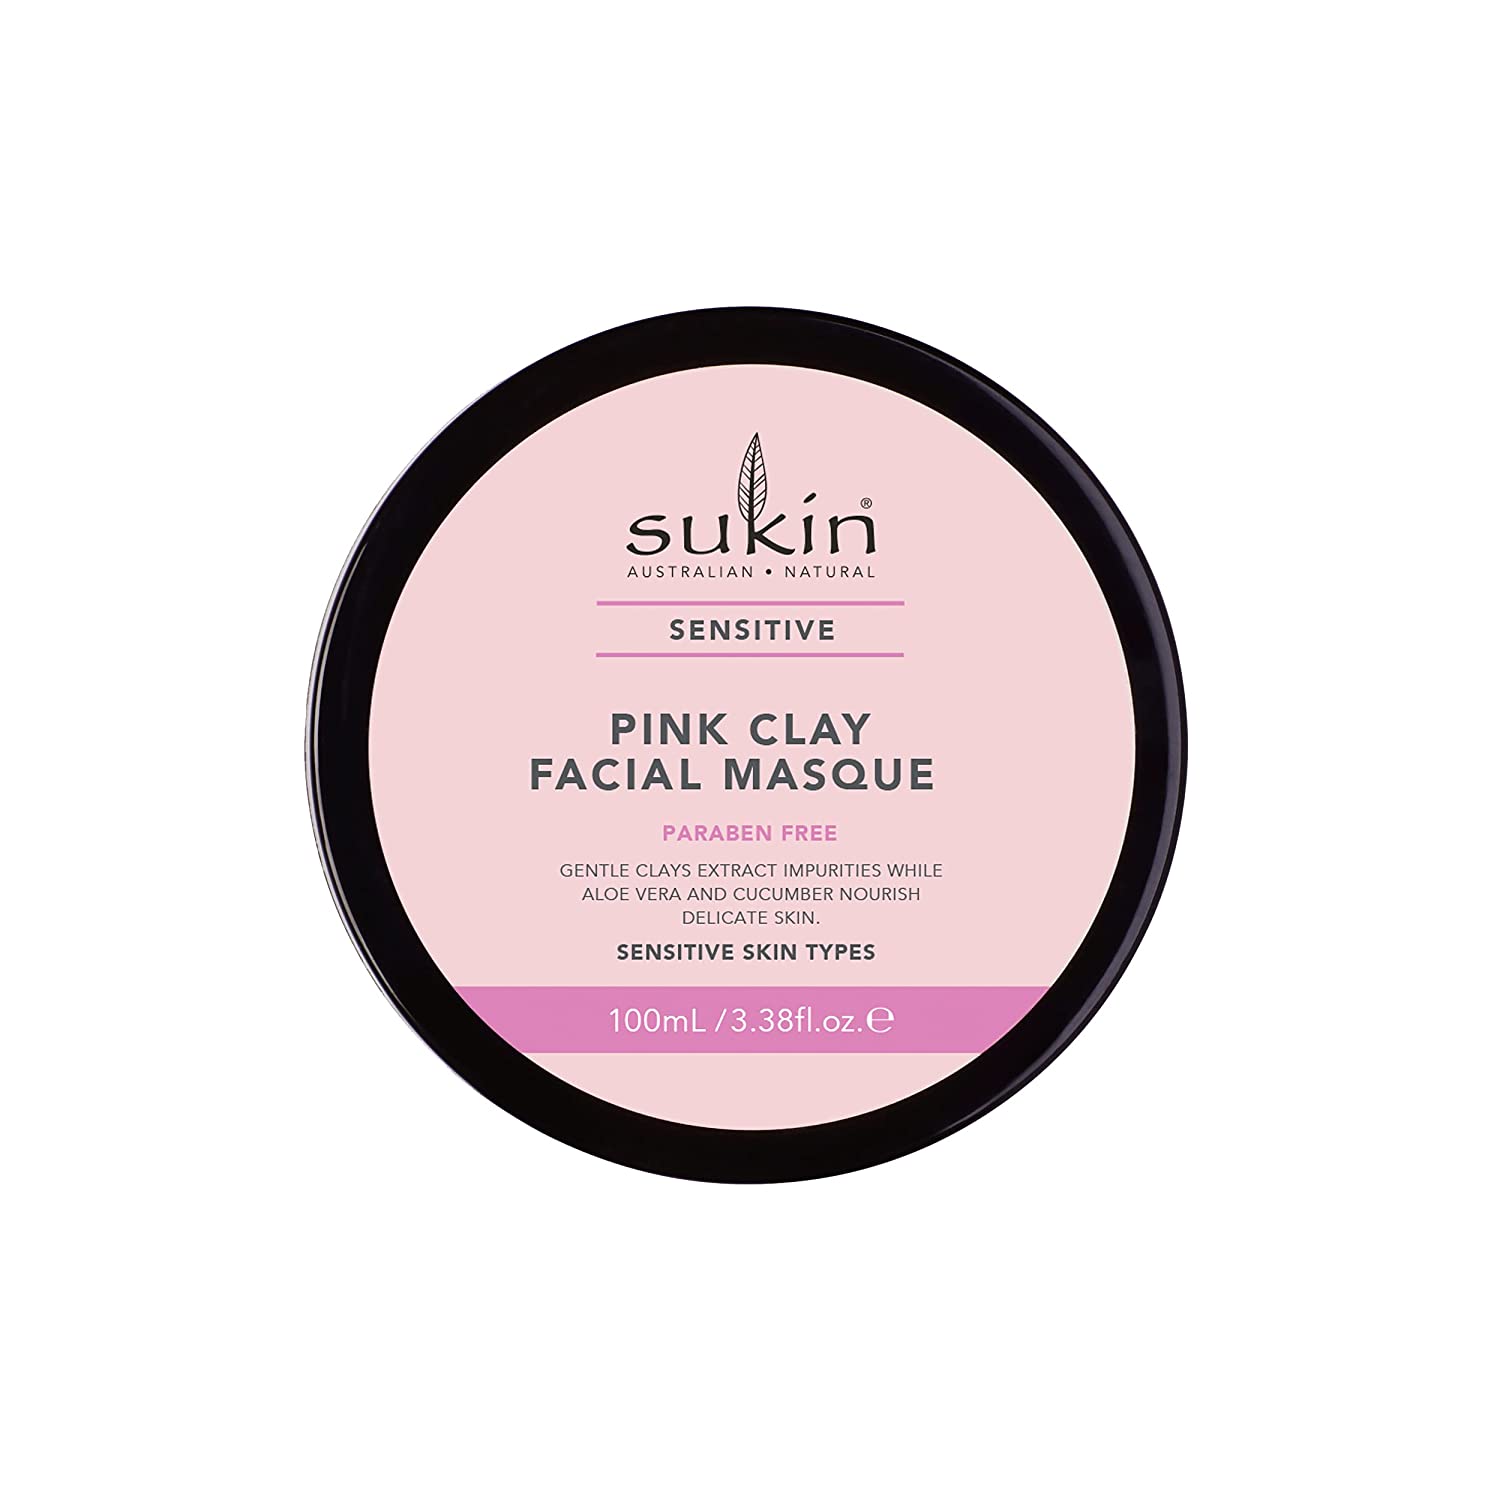 Image of Pink Clay Facial Masque, Sensitive